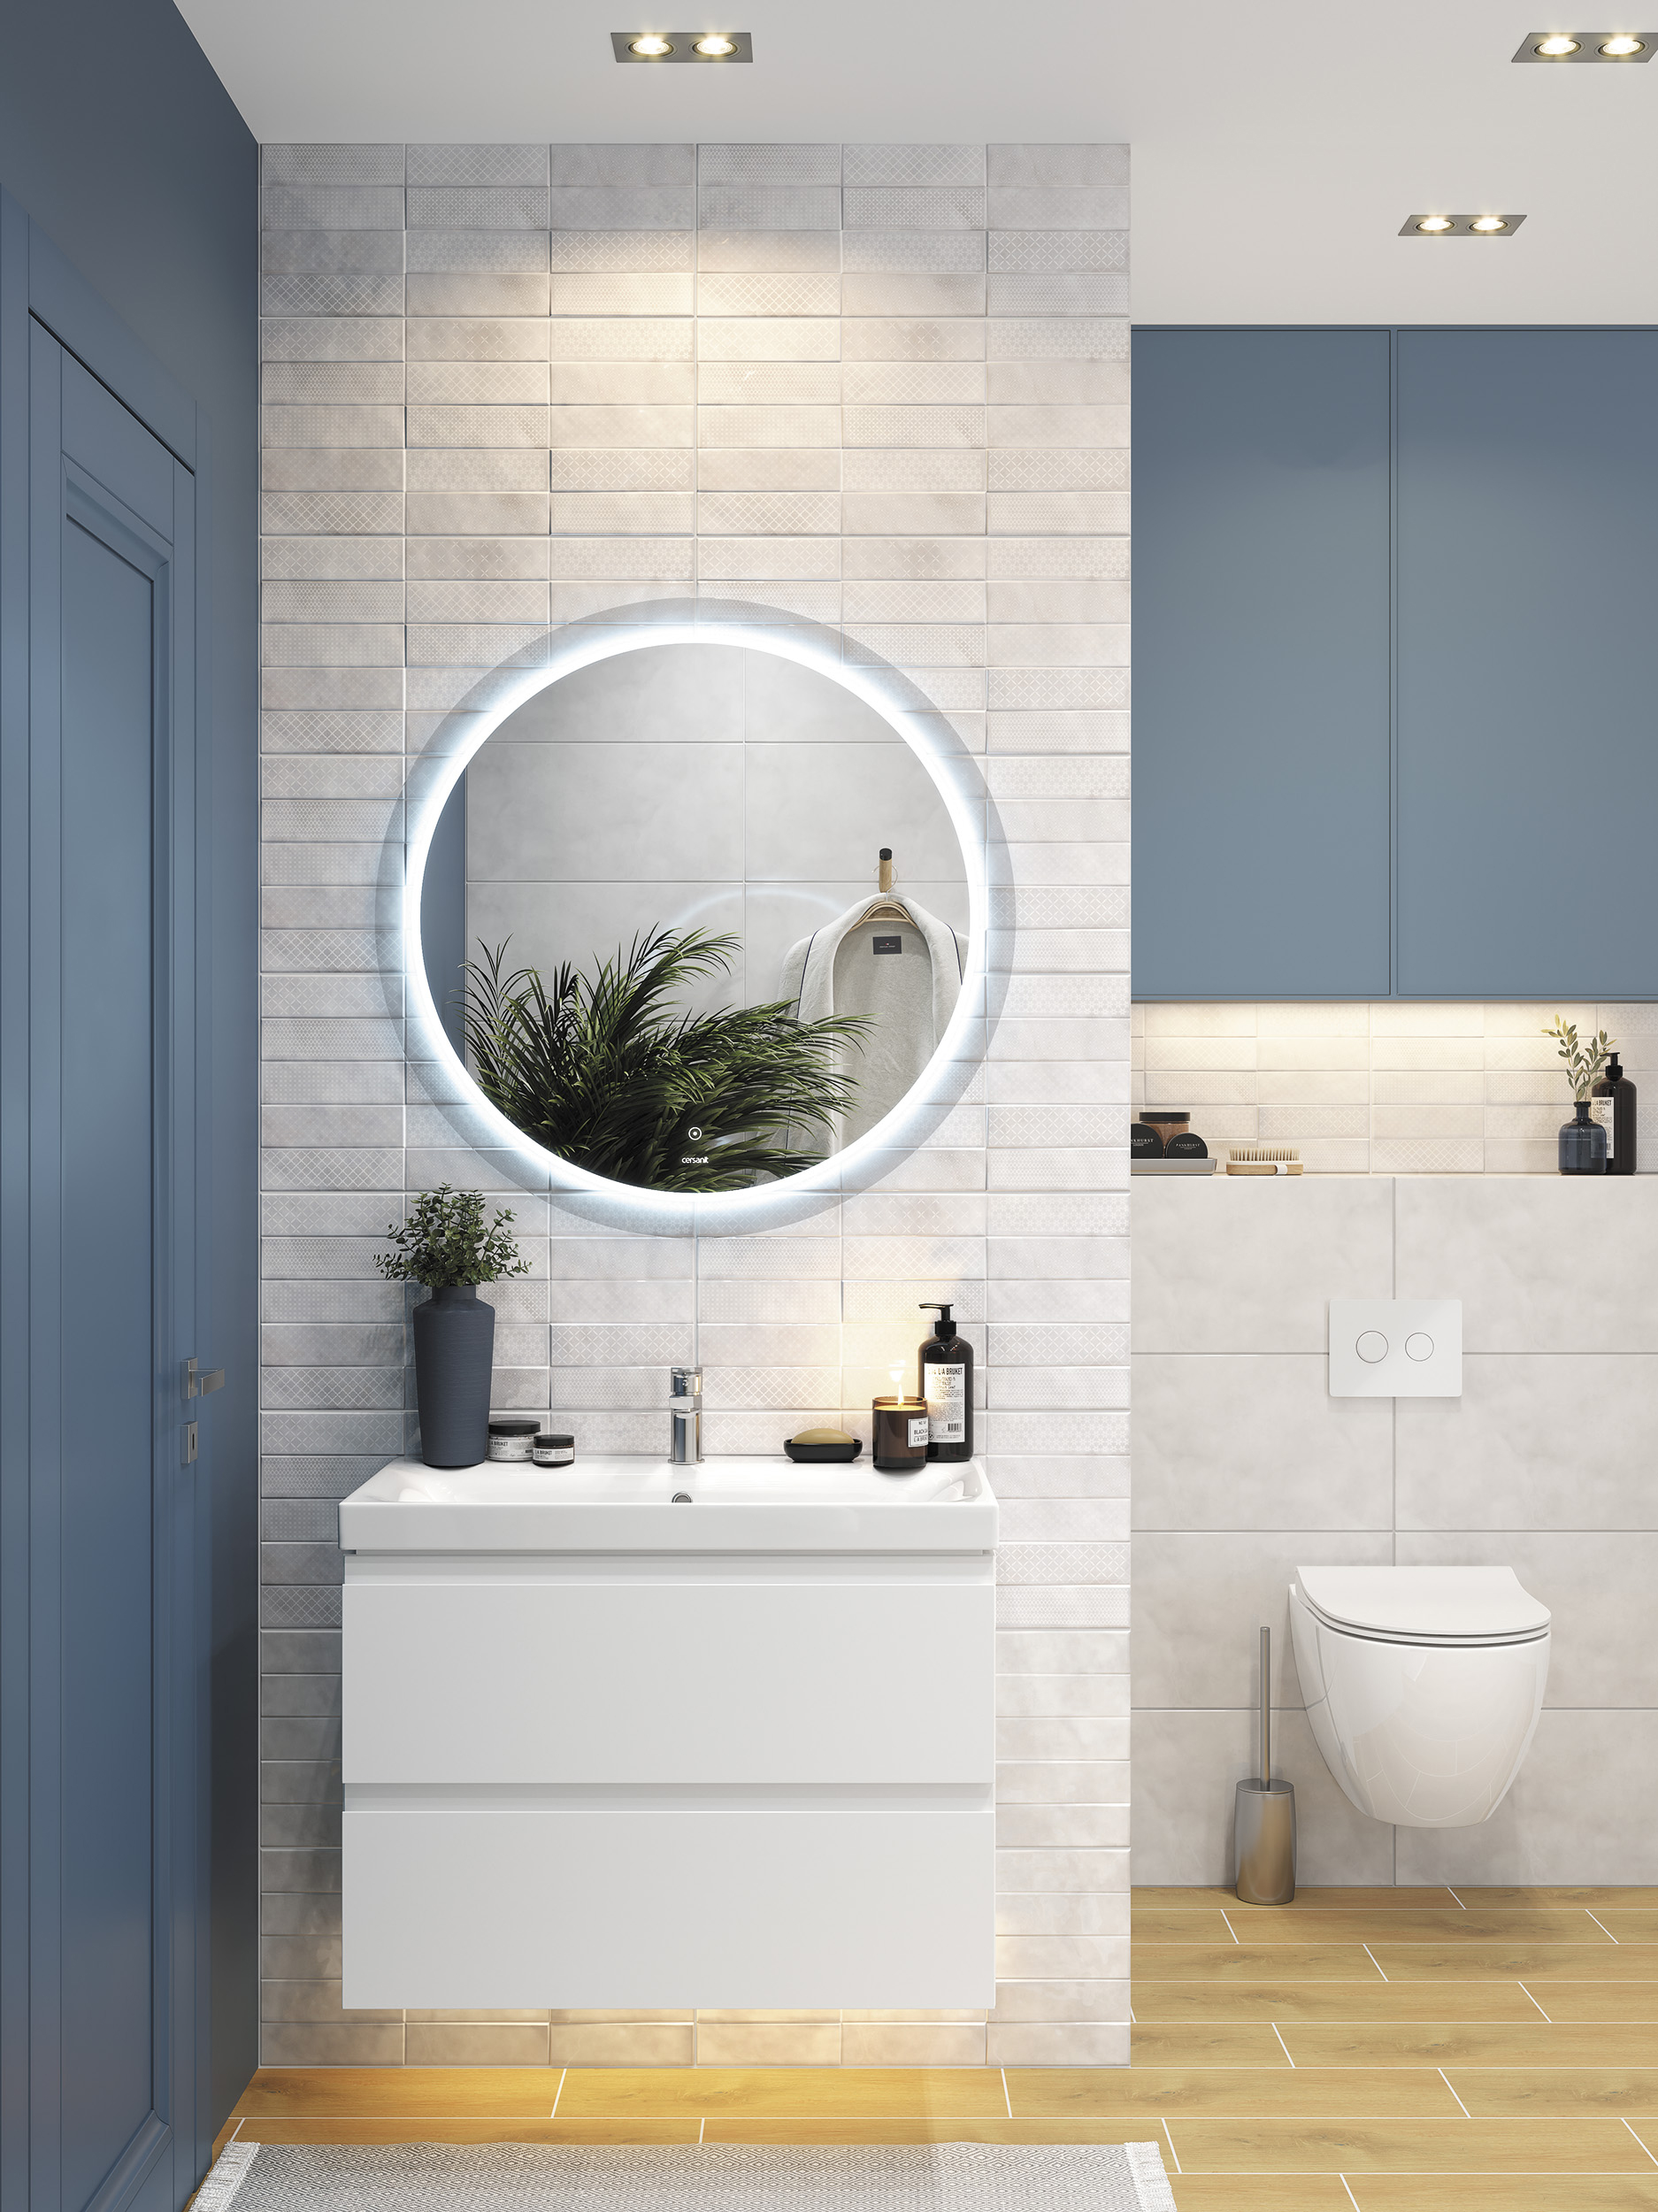 Зеркало круглое Cersanit LED 012 design 72 см, с подсветкой KN-LU-LED012*72-d-Os - 1